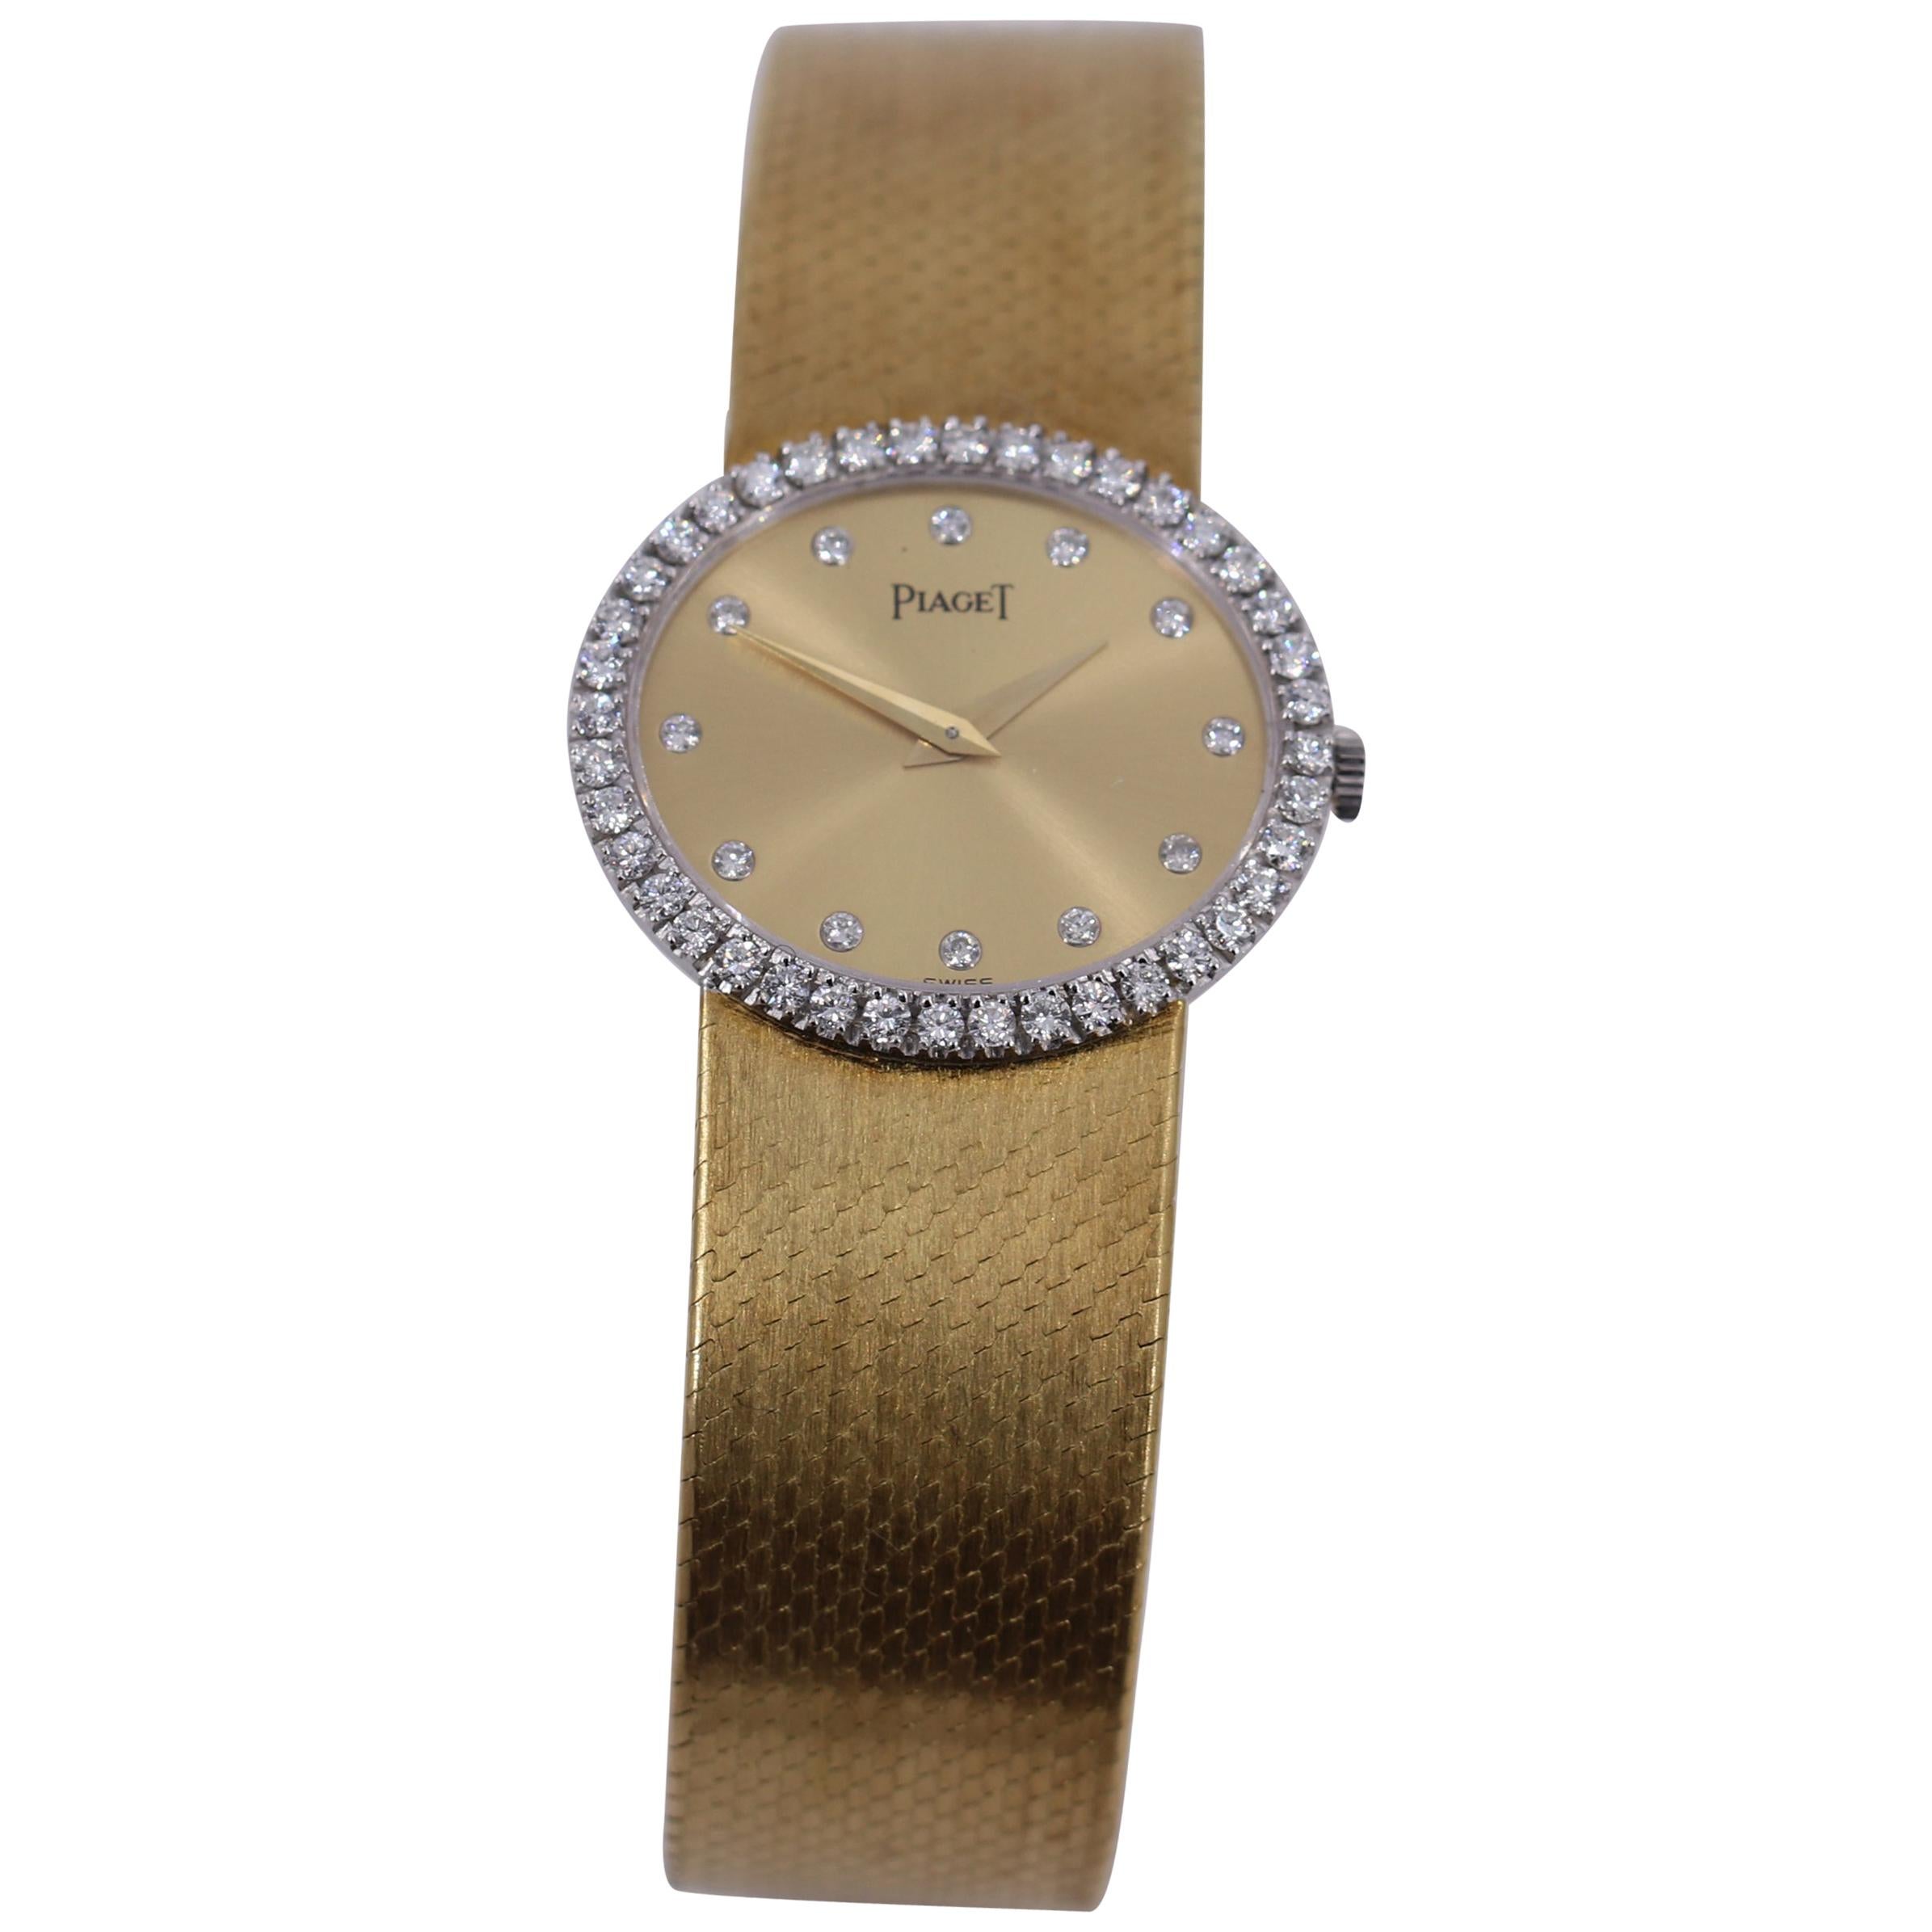 Yellow Gold Piaget Watch with Diamond Bezel and Diamond Markers